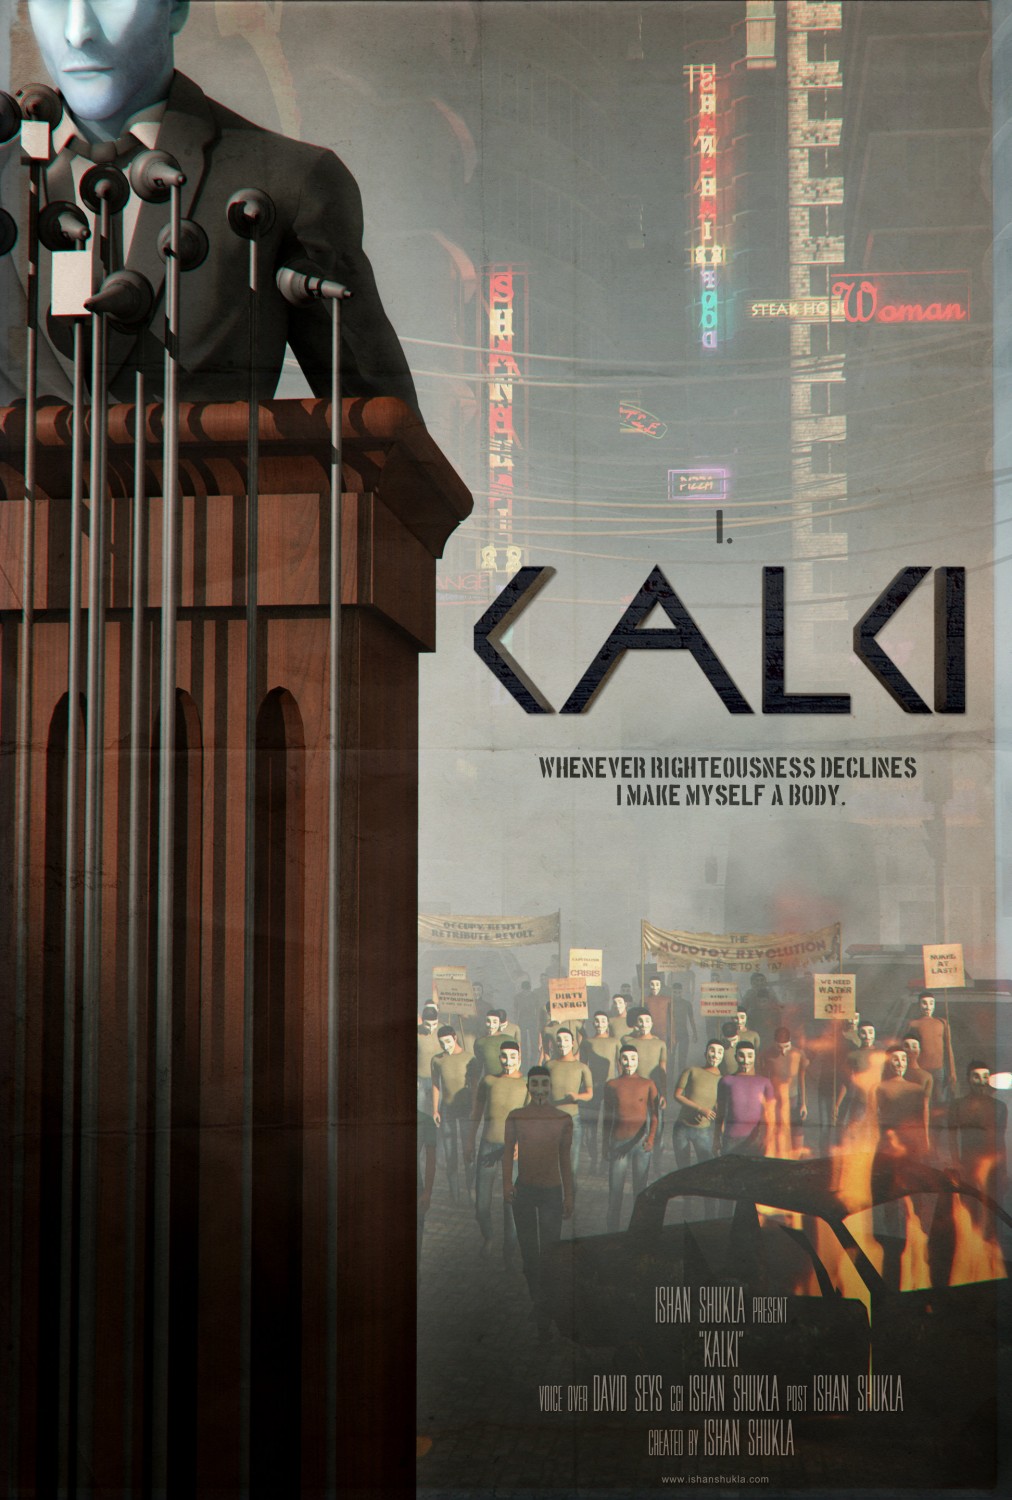 Extra Large Movie Poster Image for Kalki